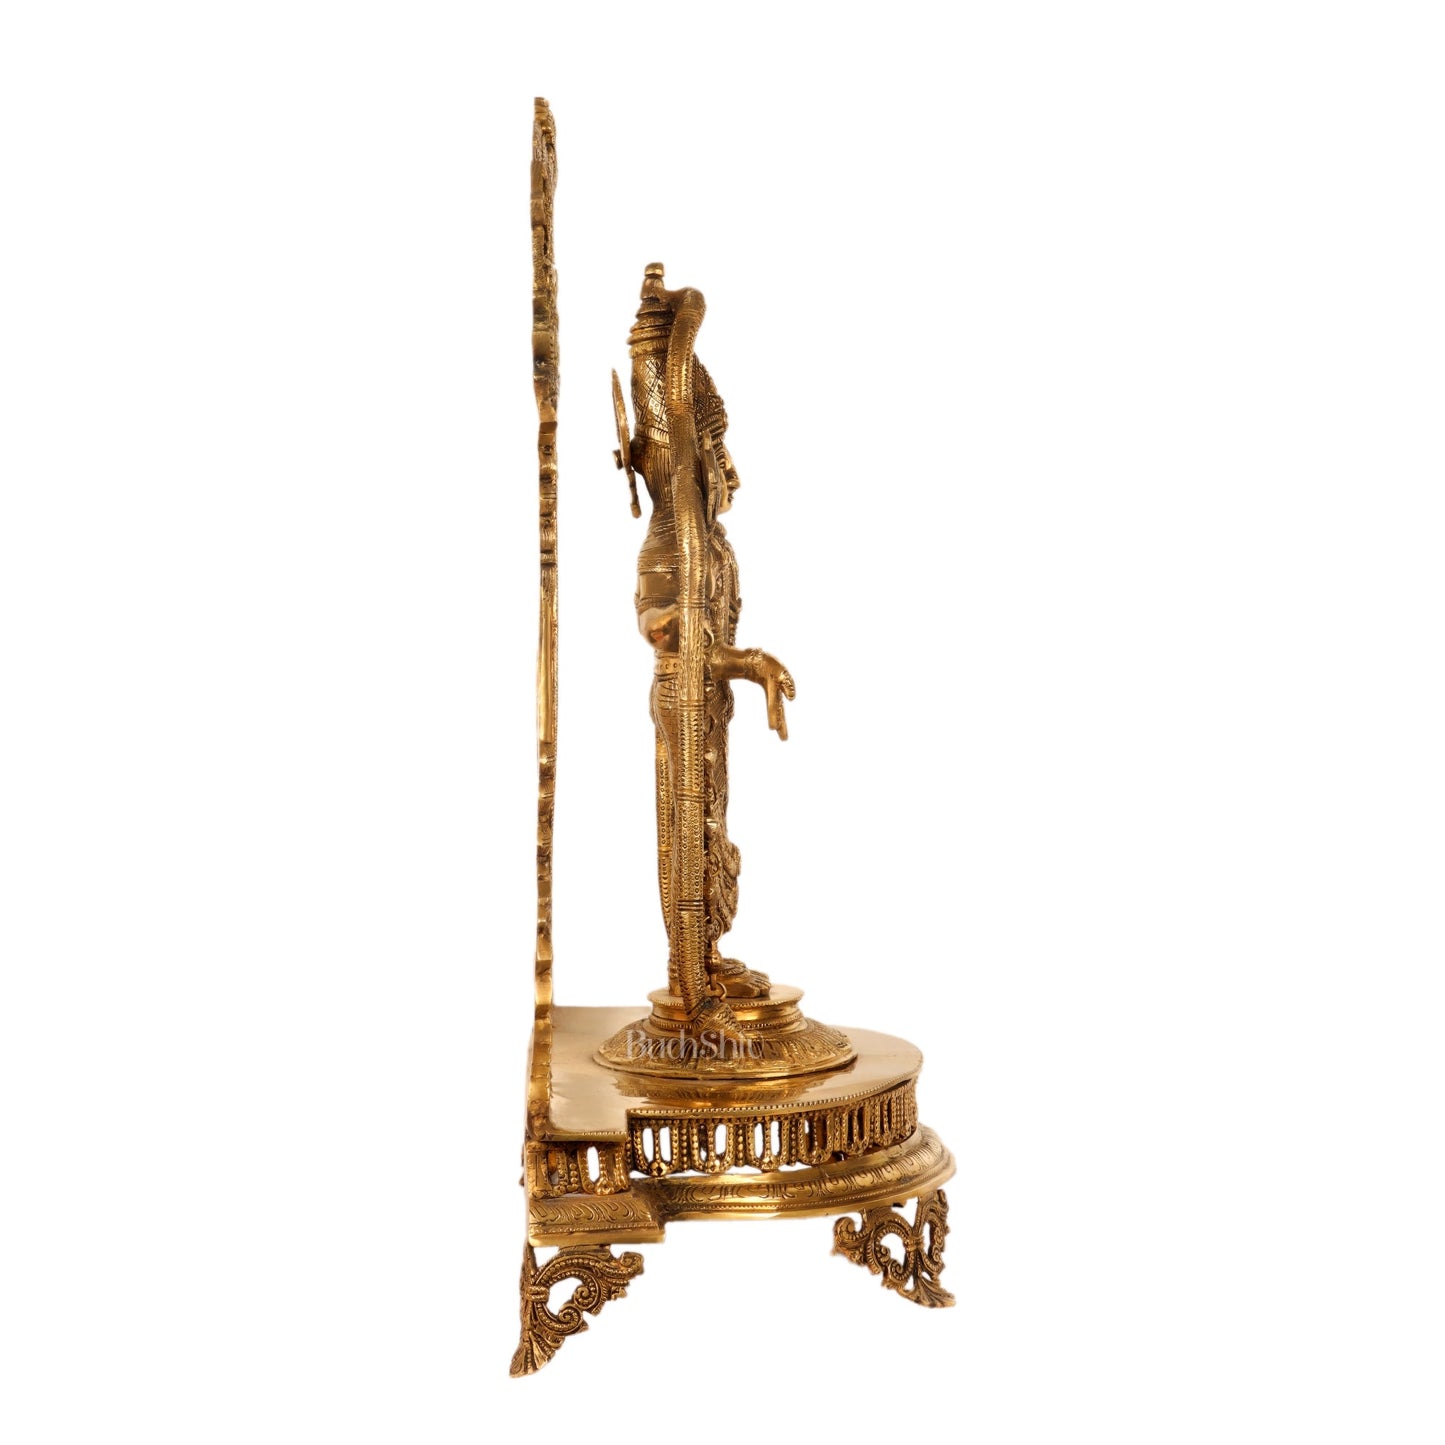 Tirupati Balaji Brass Idol 25 inches - Budhshiv.com